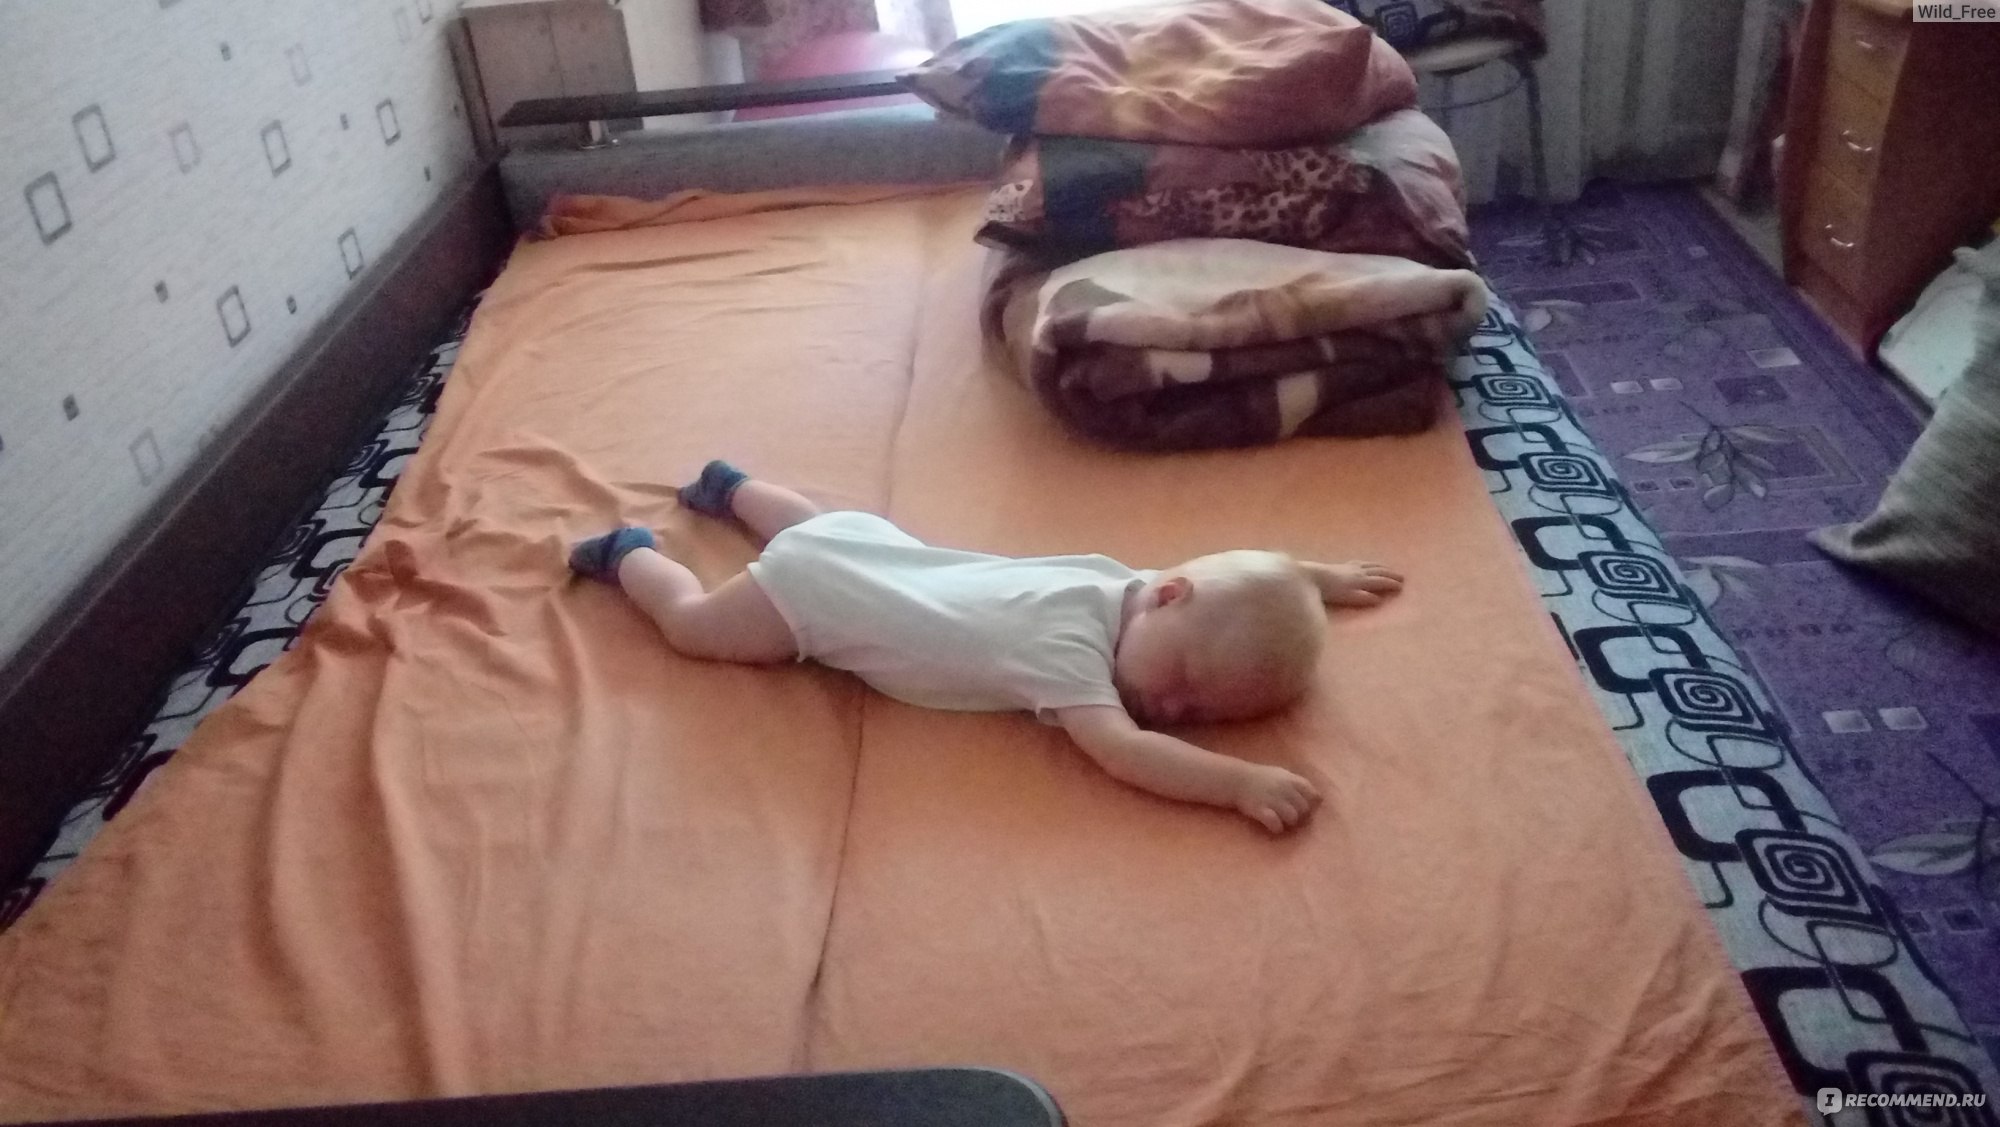 Ребенок на кровати ползает а на полу нет